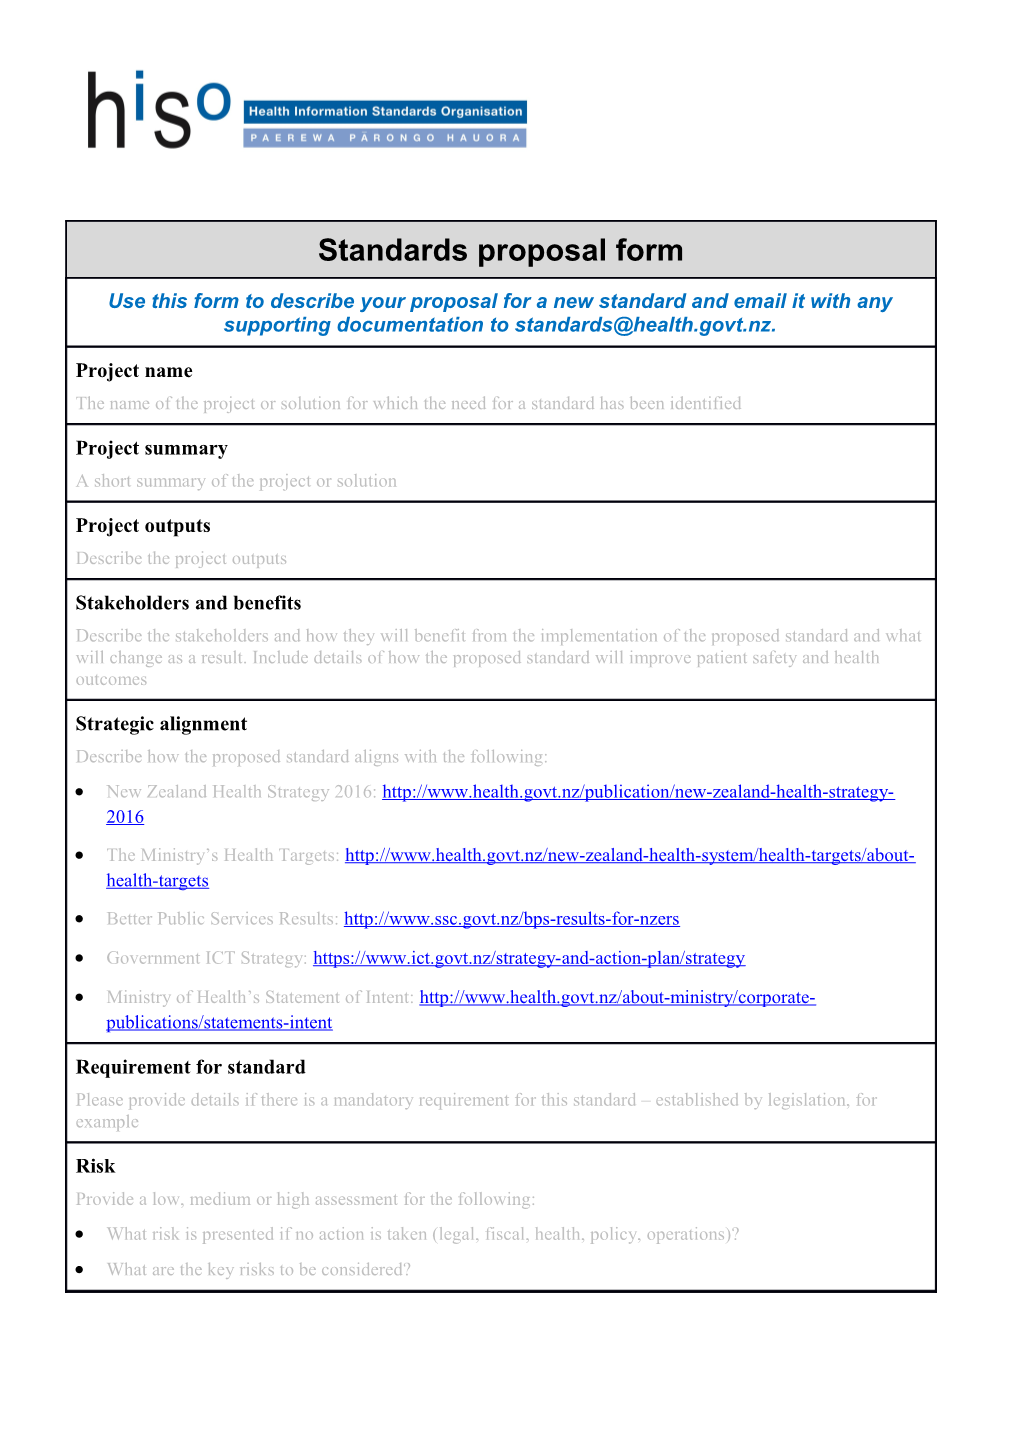 Standards Proposal Questionnaire